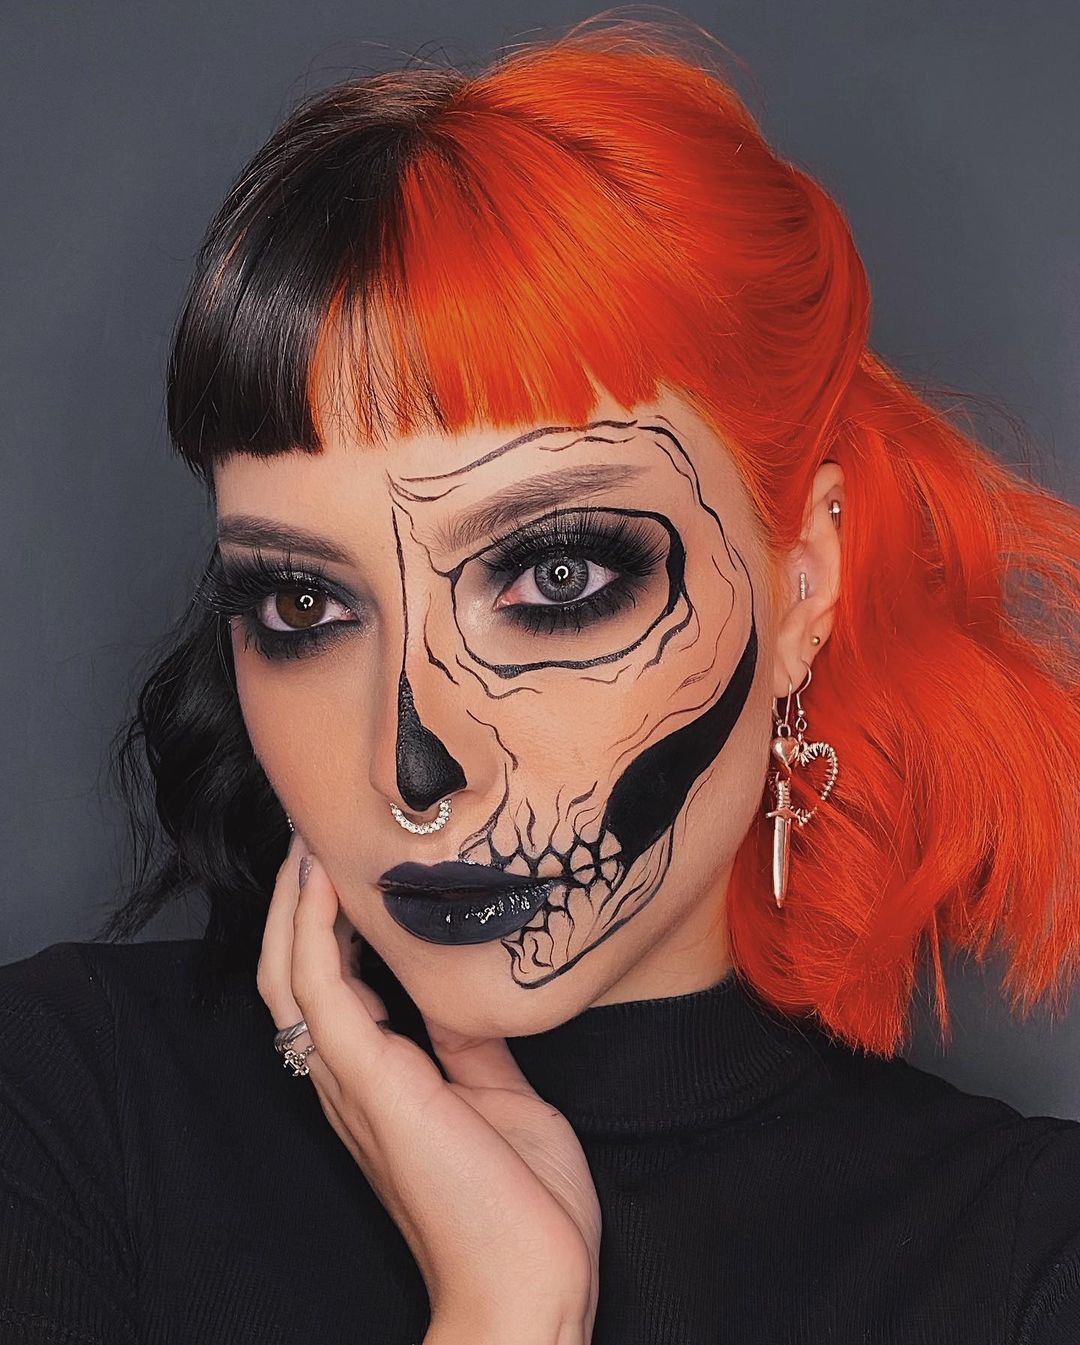 Maquiagem de Halloween: confira makes simples para arrasar!